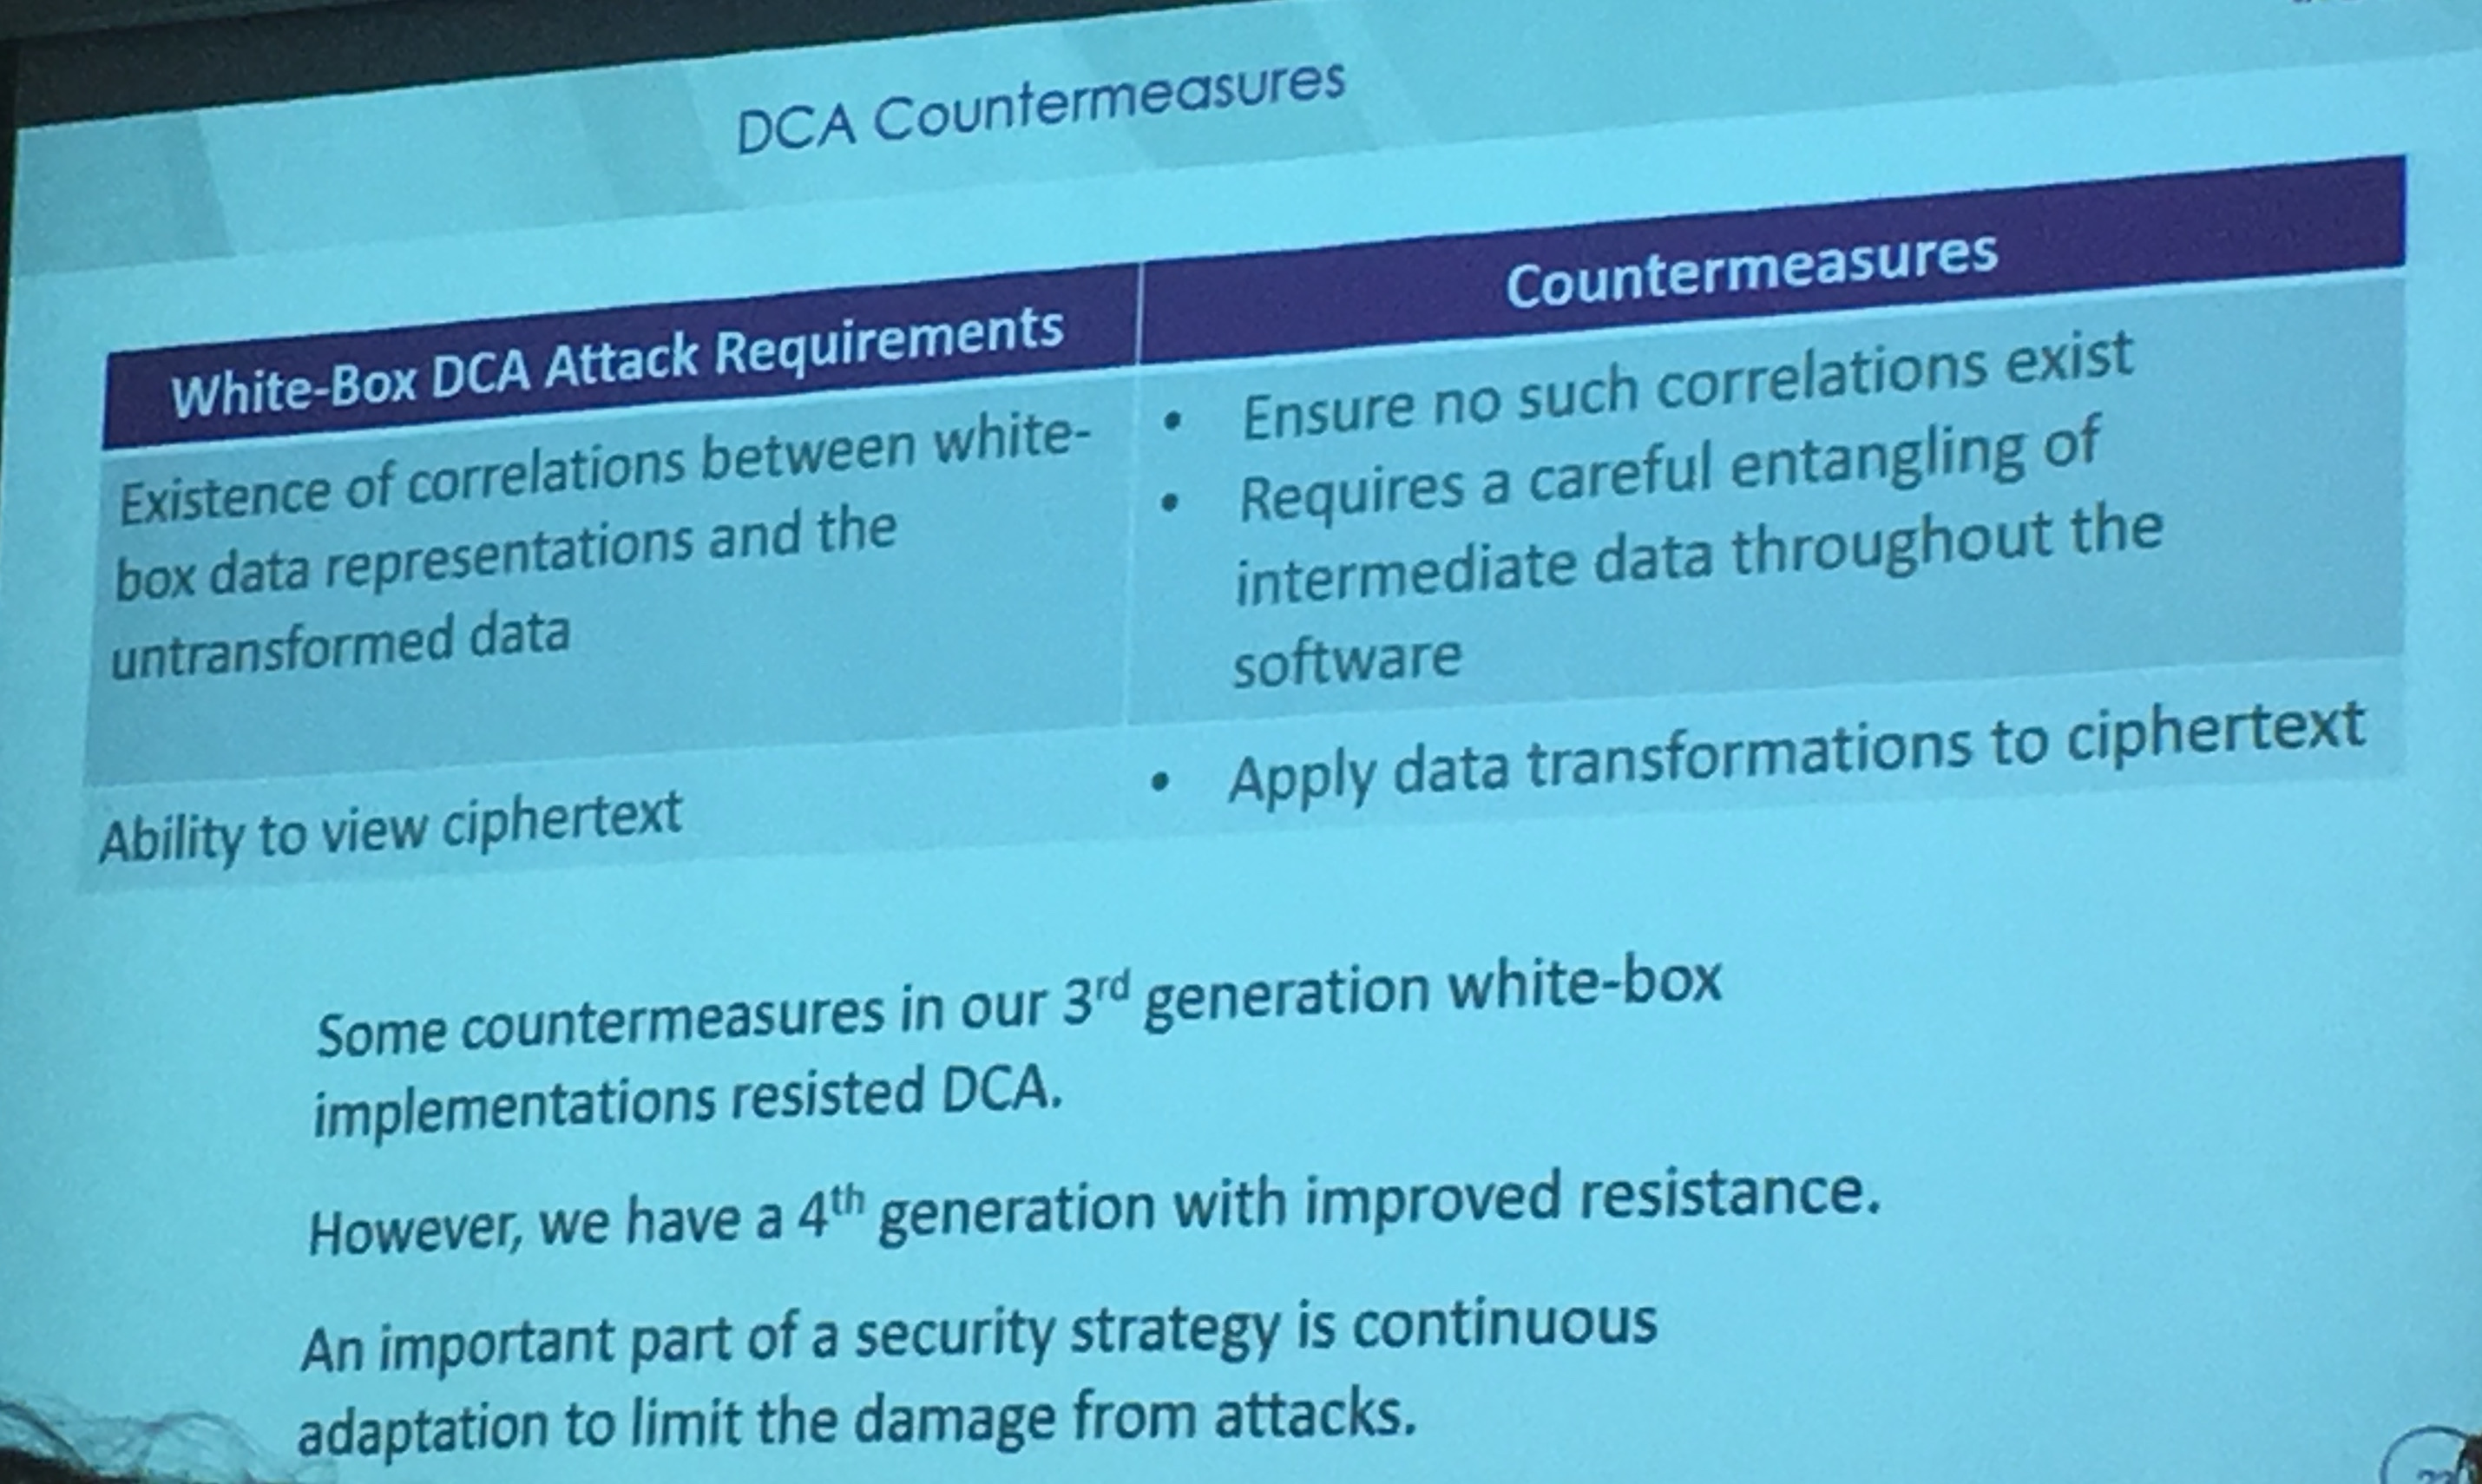 DCA countermeasures